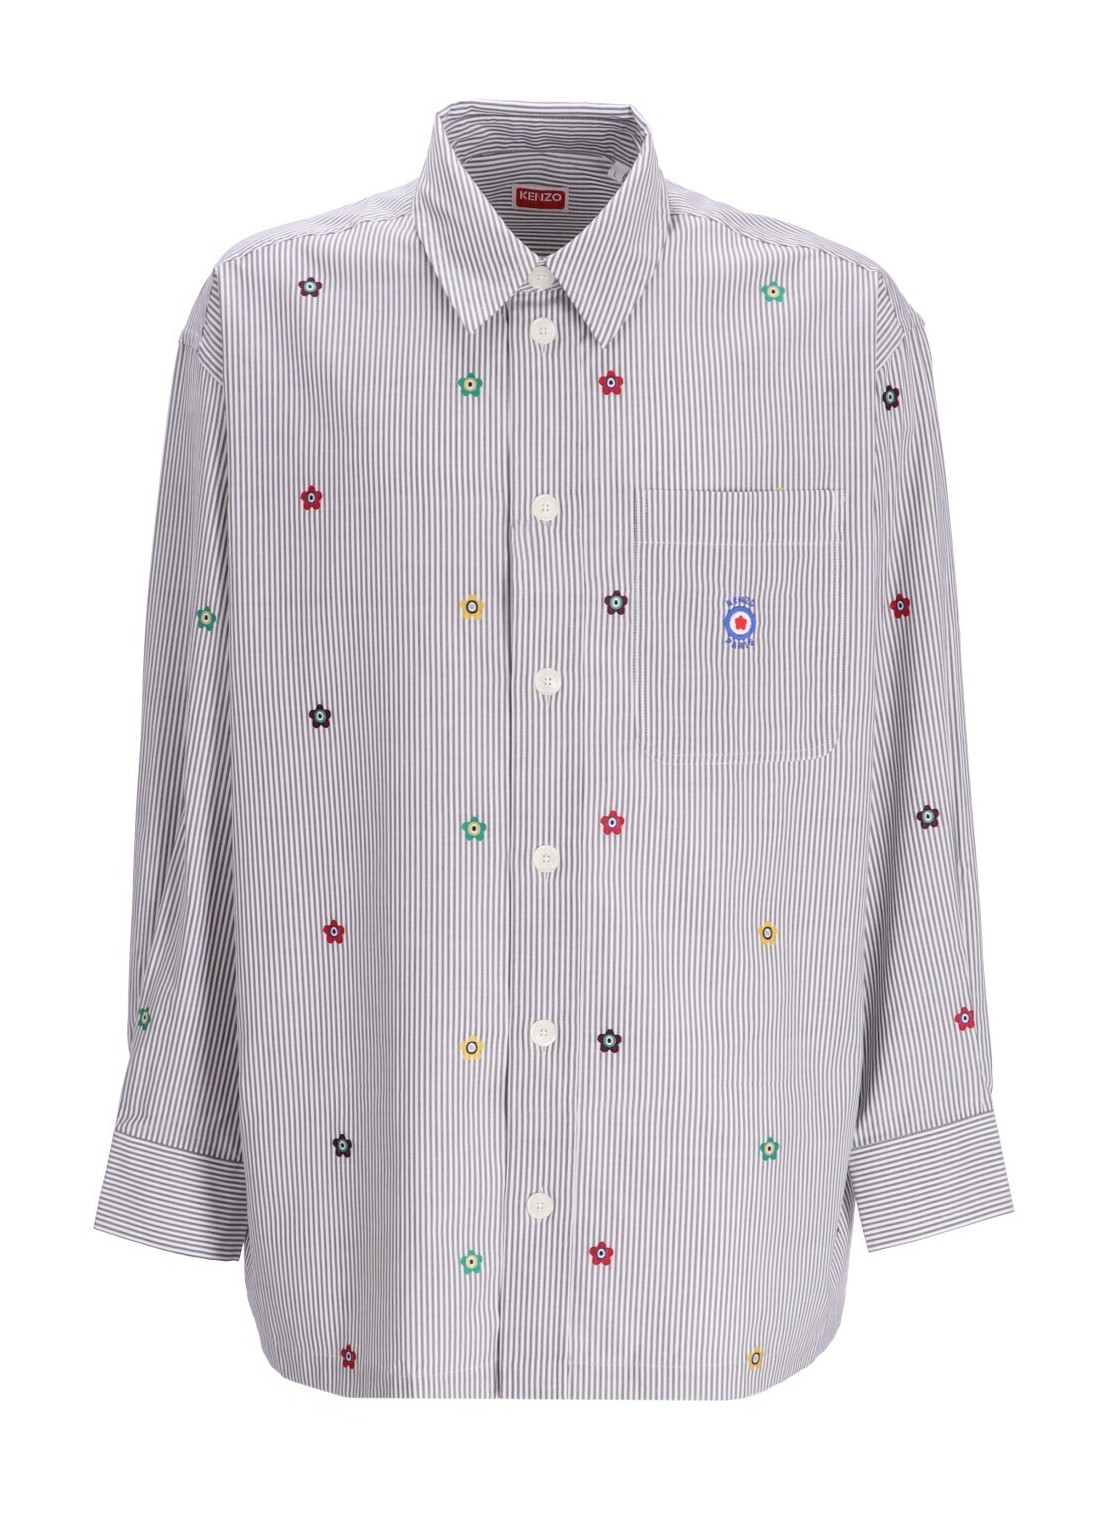 Camiseria kenzo shirt man kenzo target oversized sh fd65ch5079lj 97 talla gris
 